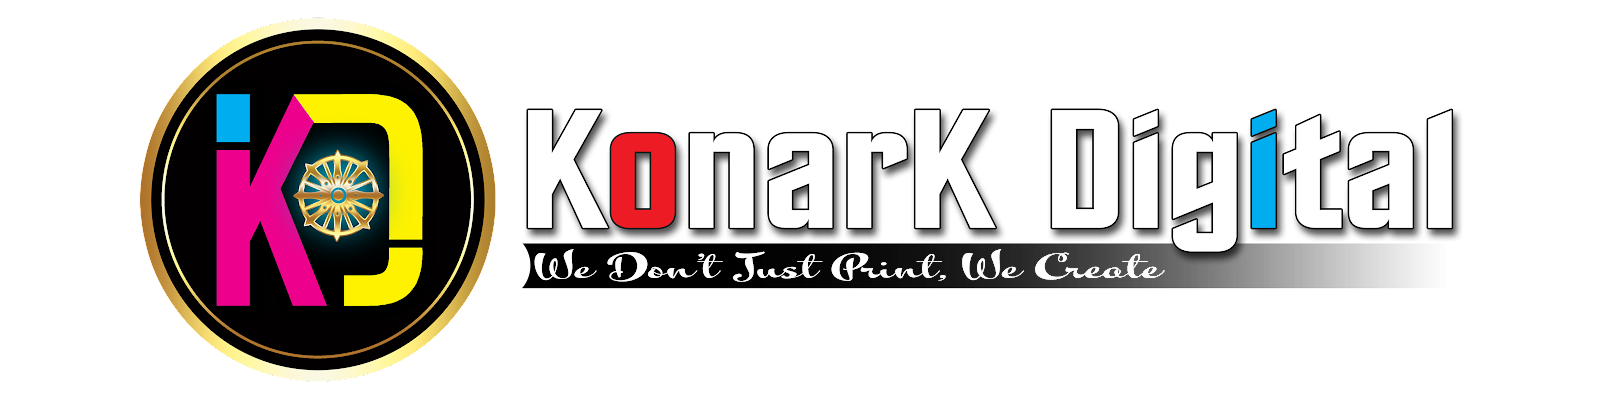 Konark Logo New Flex - Copy